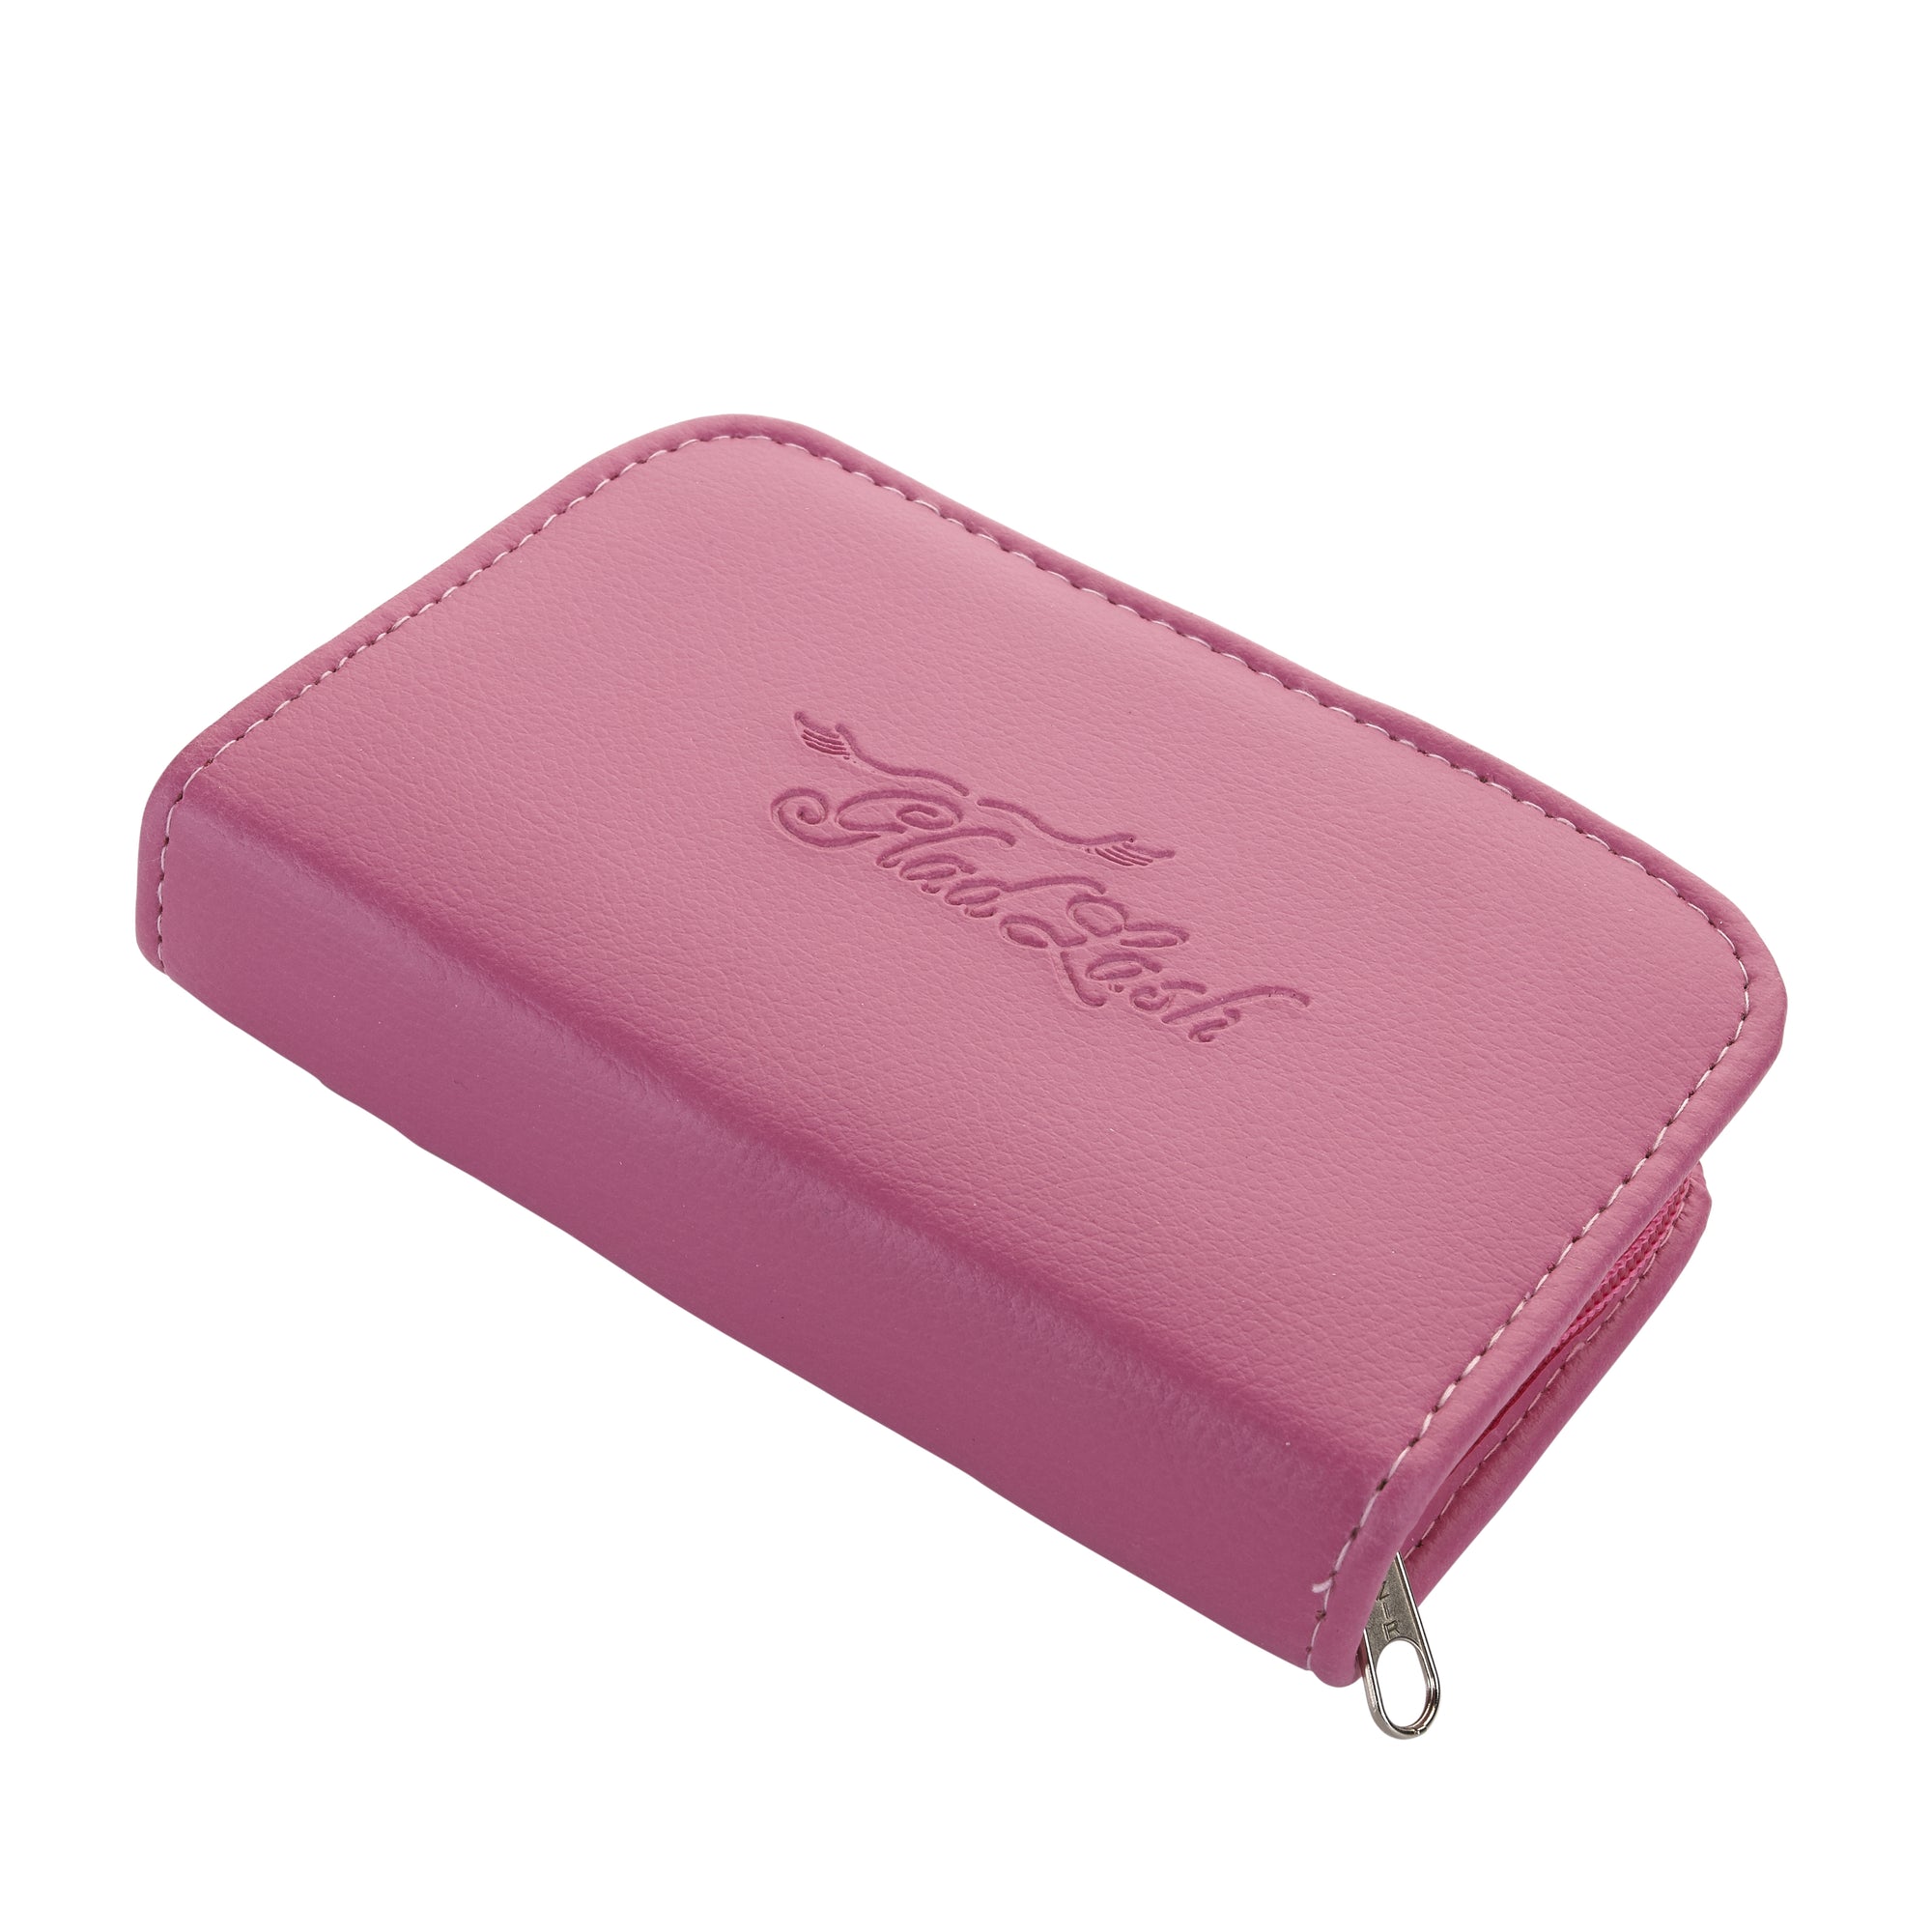 Compact pink tweezer case by Glad Lash